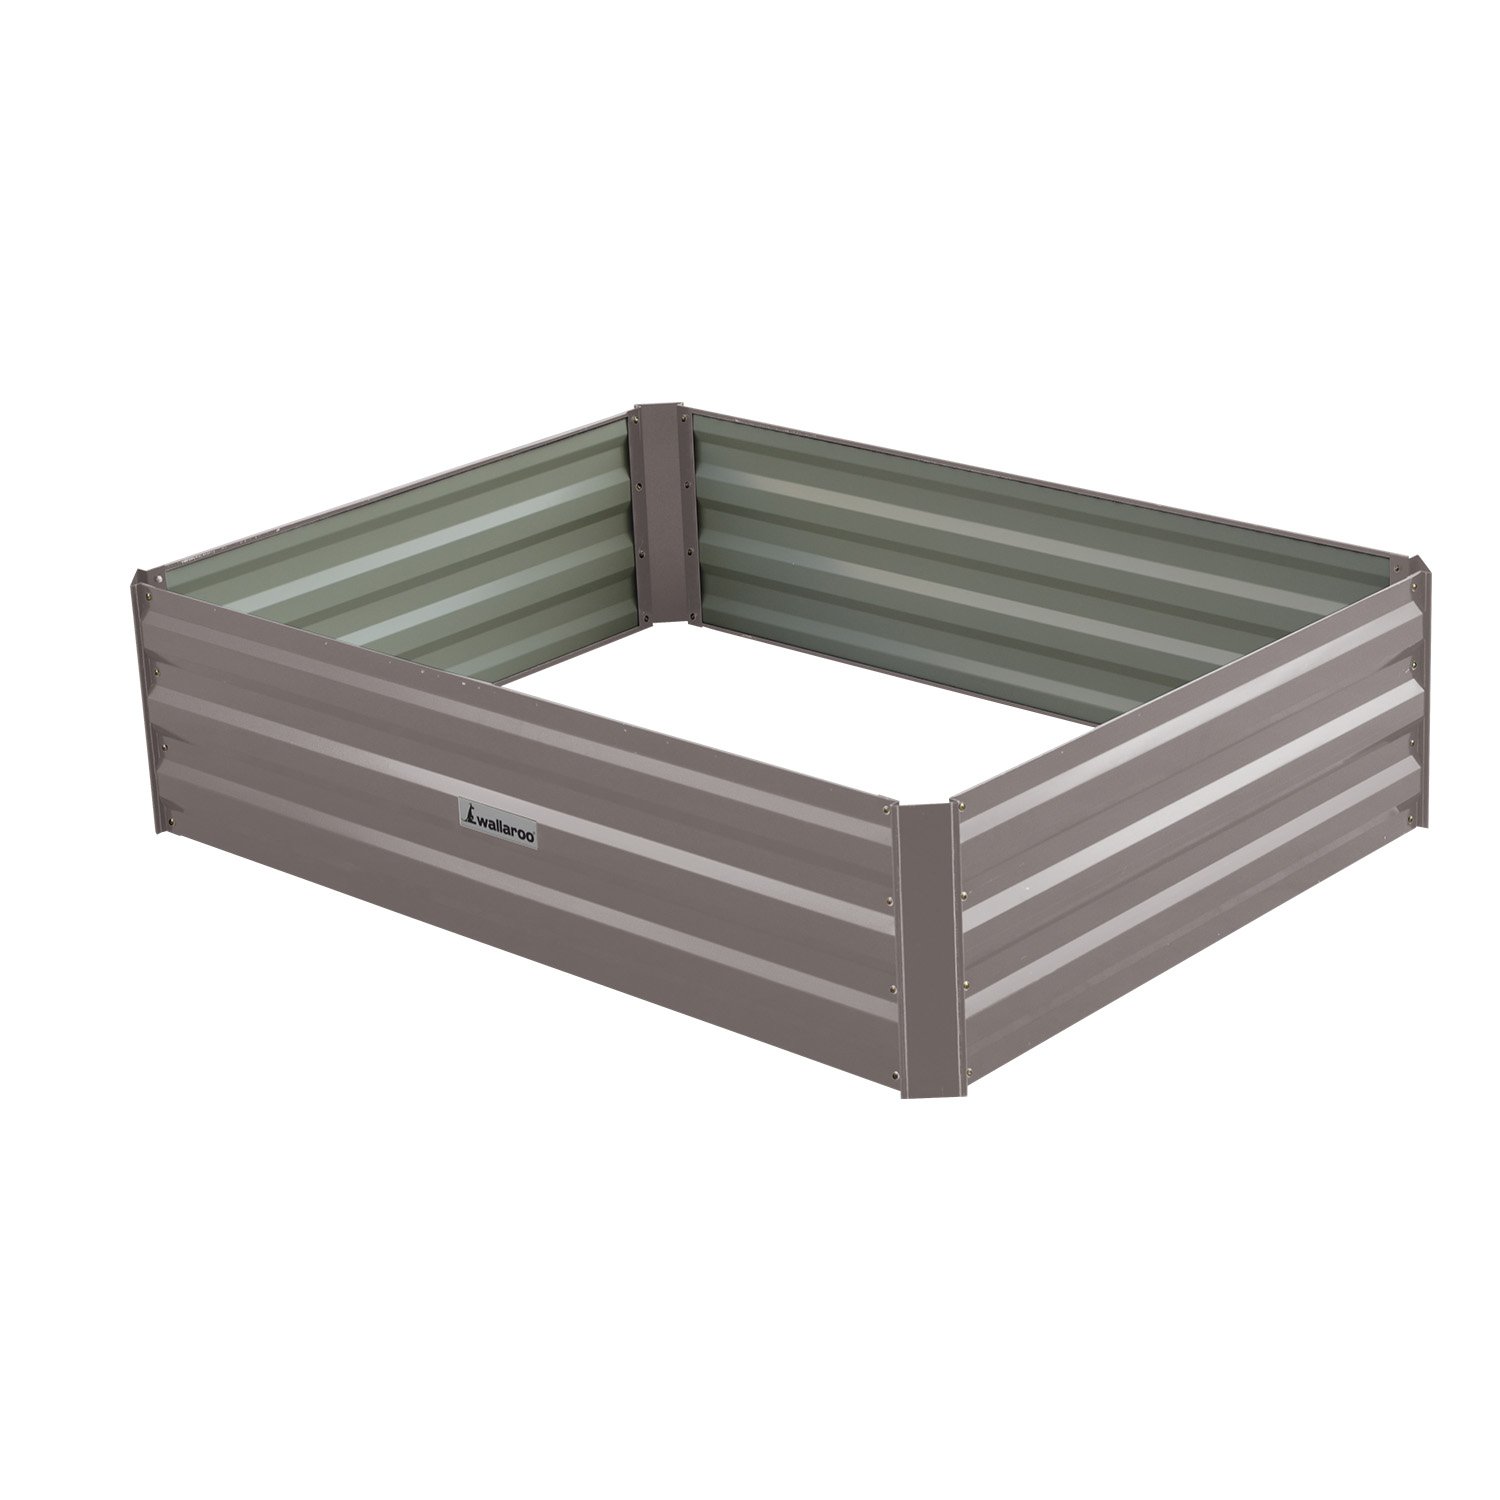 Wallaroo Garden Bed 120 x 90 x 30cm Galvanized Steel - Grey 1